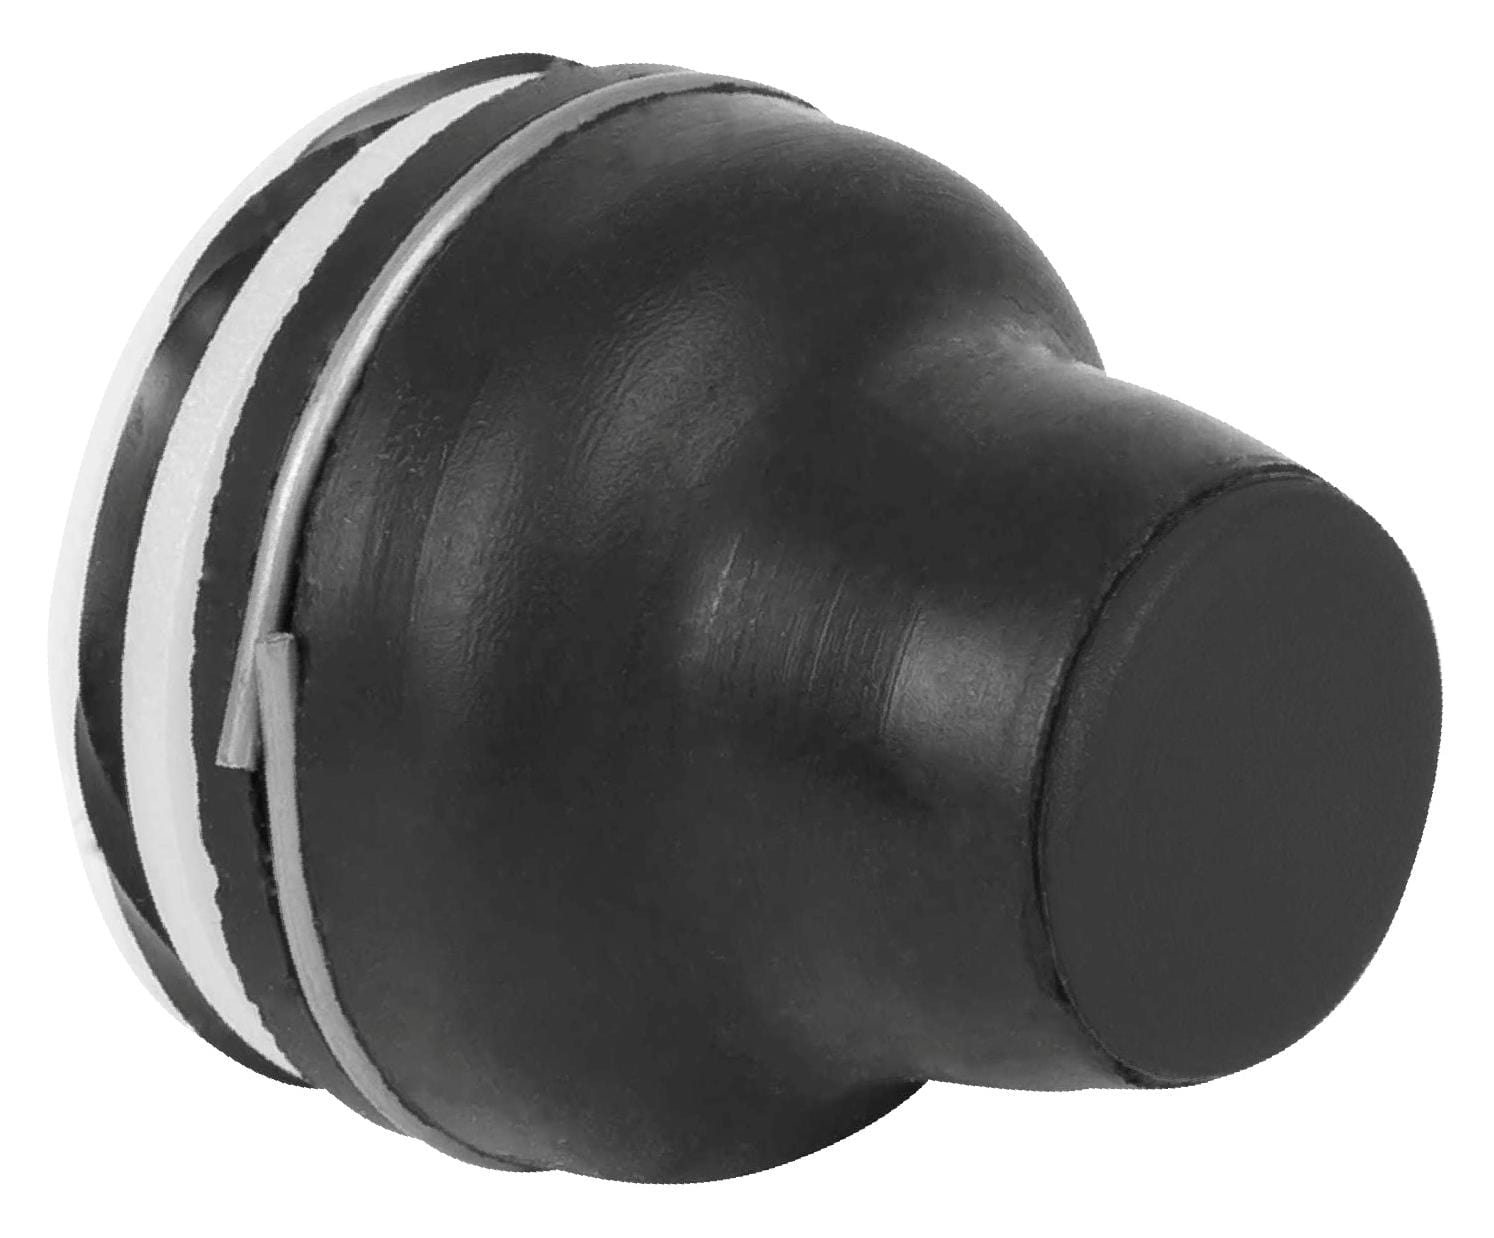 XACB9122 SWITCH CAP, BLACK, PUSH BUTTON SCHNEIDER ELECTRIC